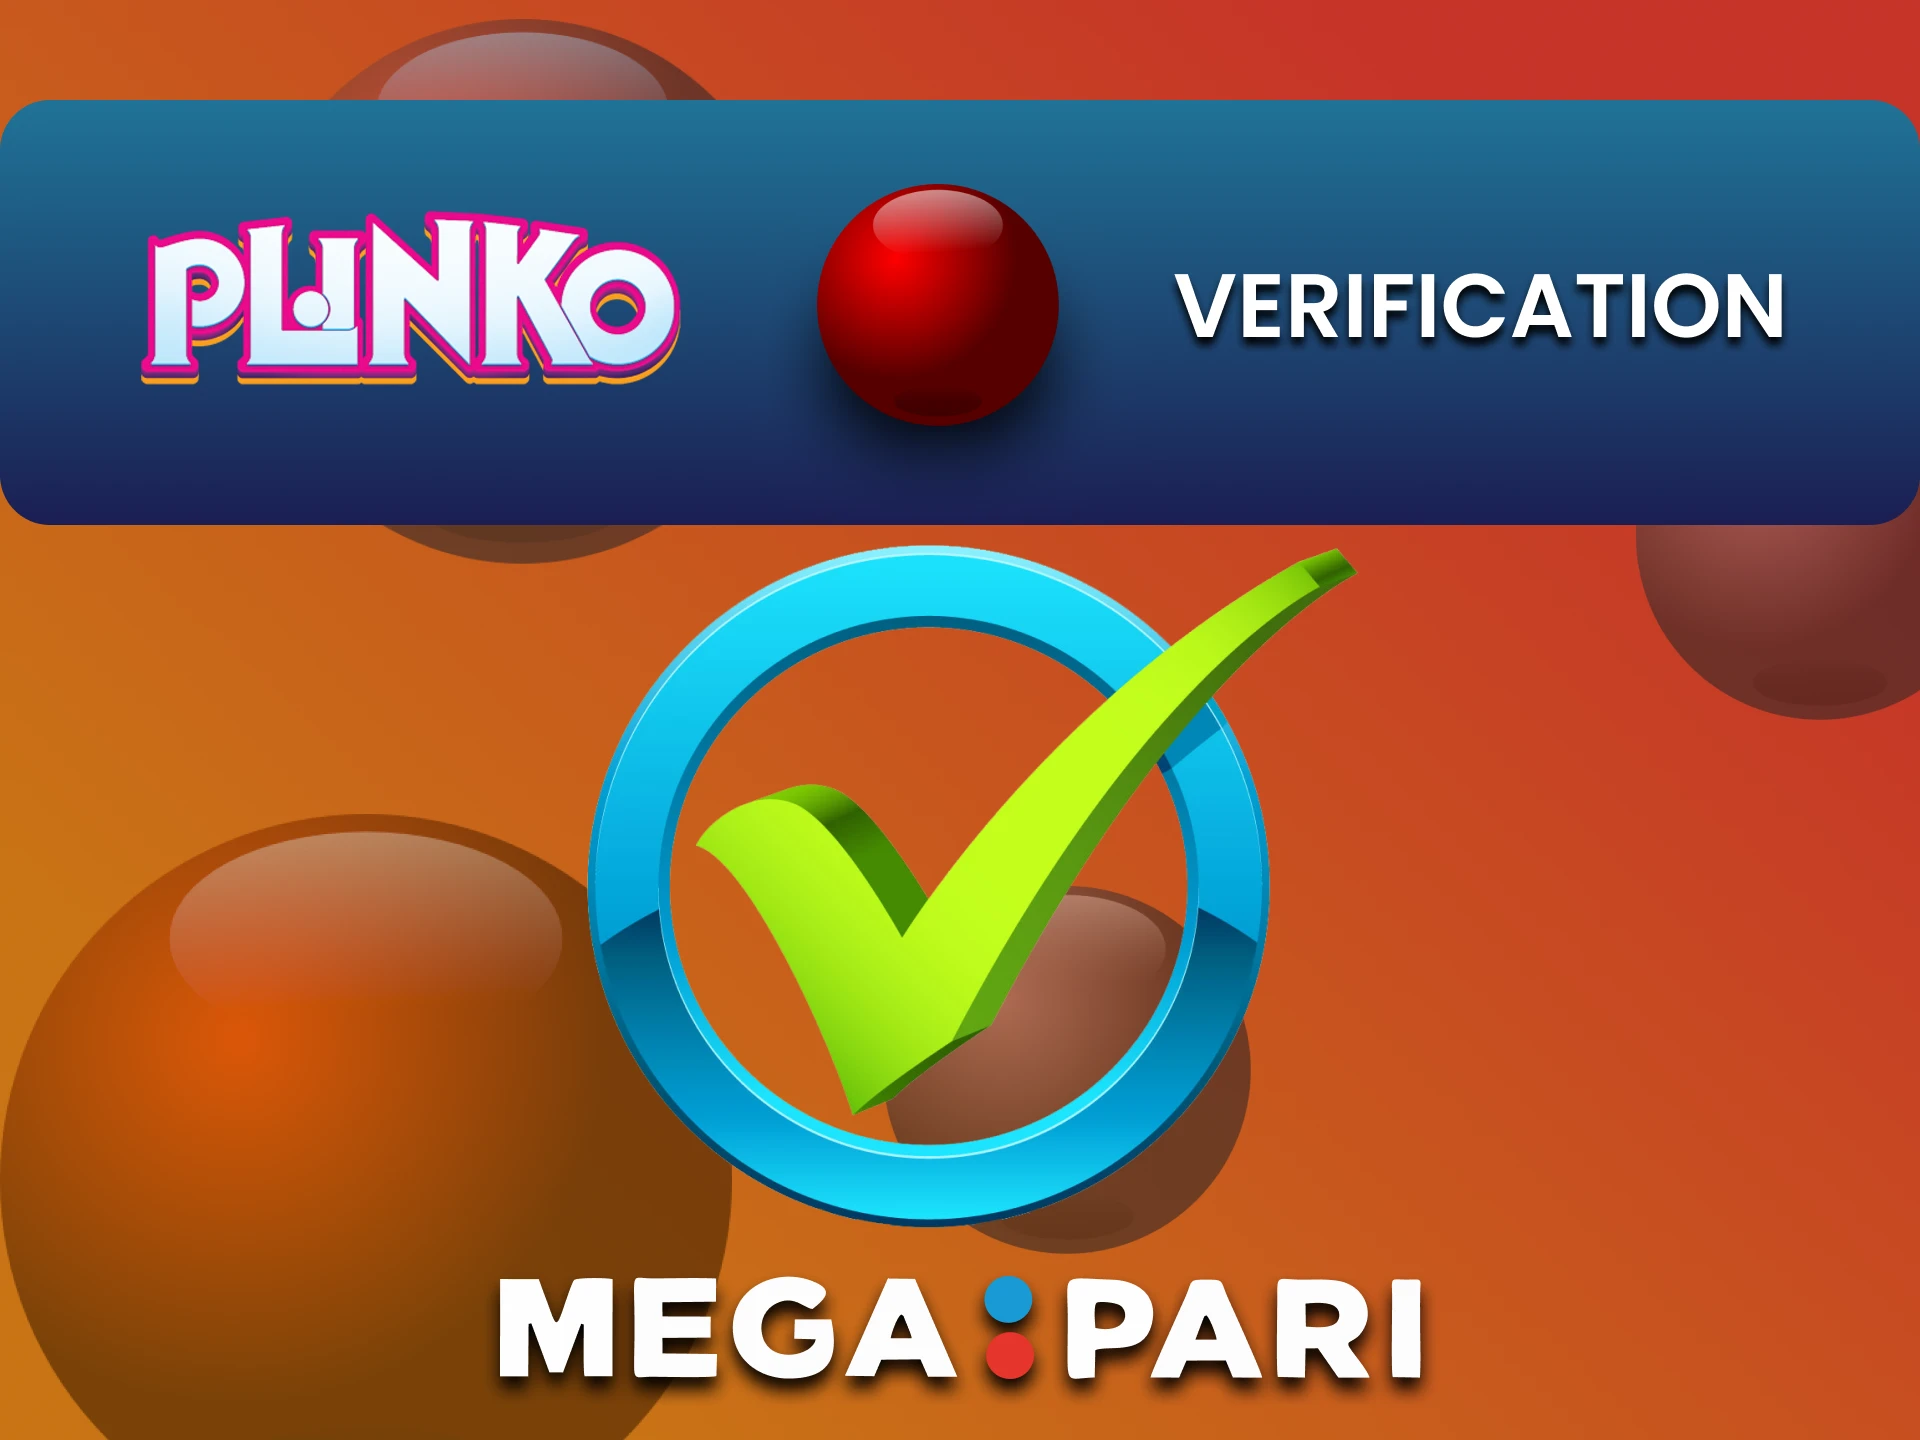 Fill in your personal data for Plinko on Megapari.